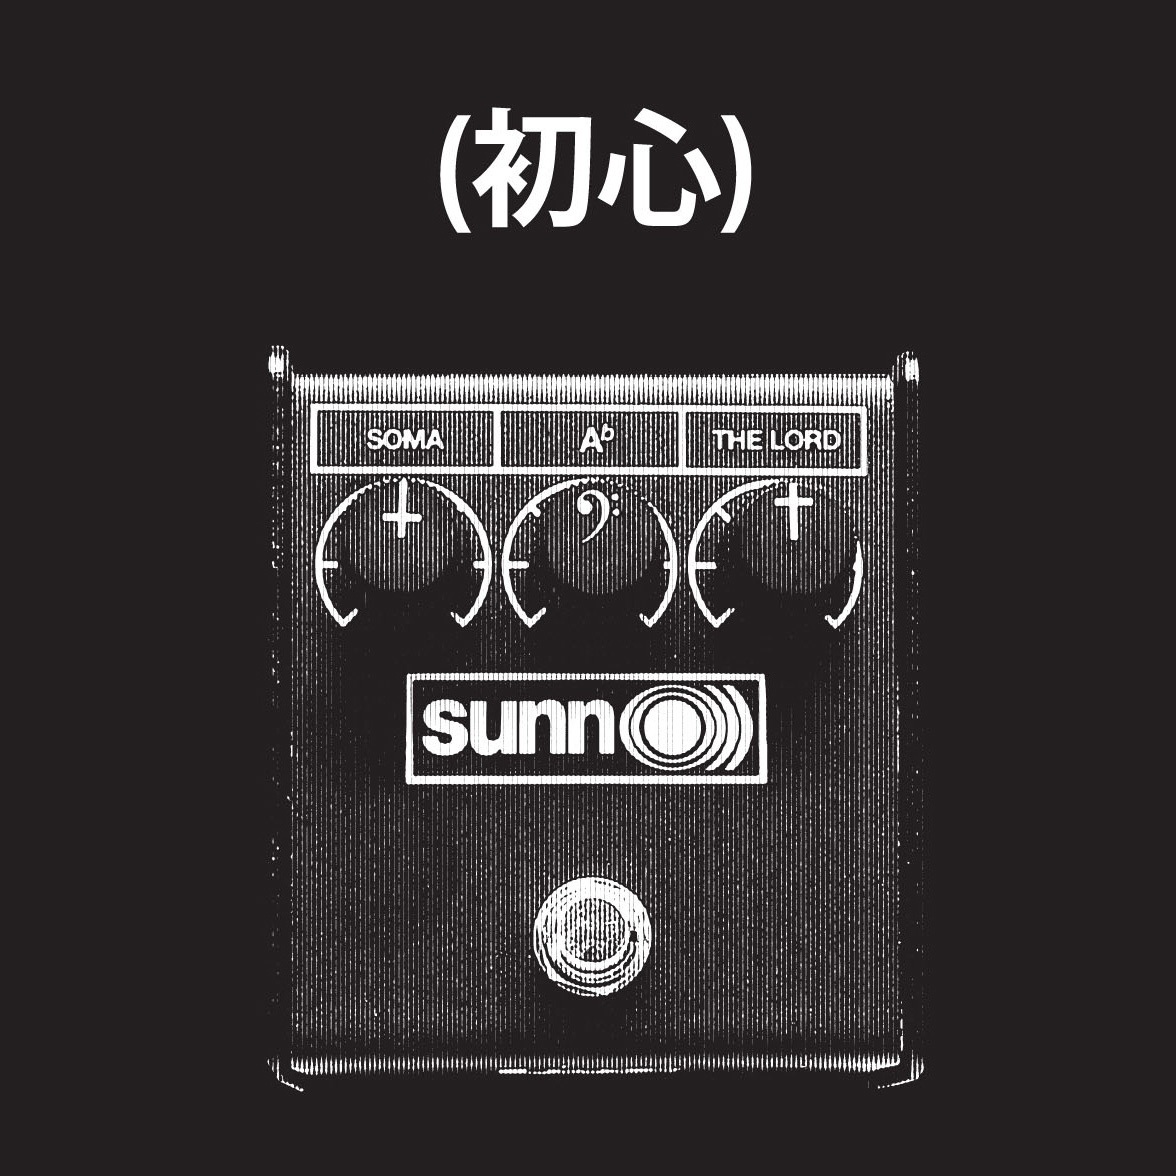 SUNN O))) - (初心) GrimmRobes Live 101008 cover 